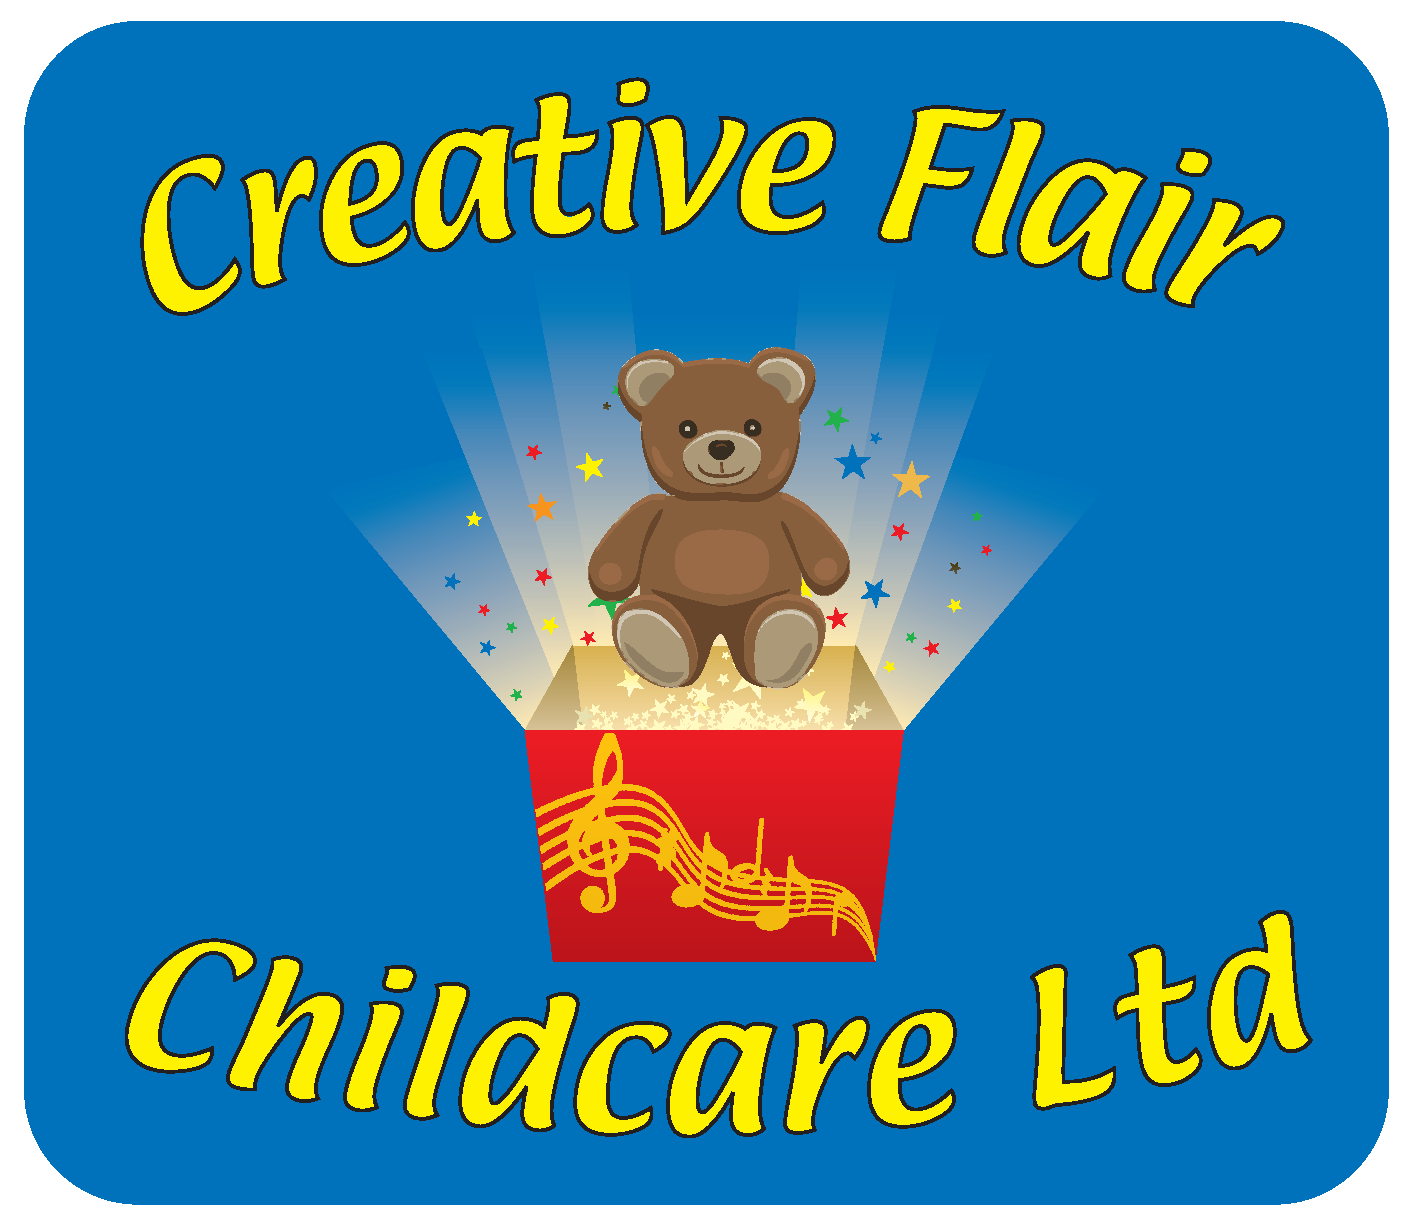 Creative Flair Childcare Ltd's logo